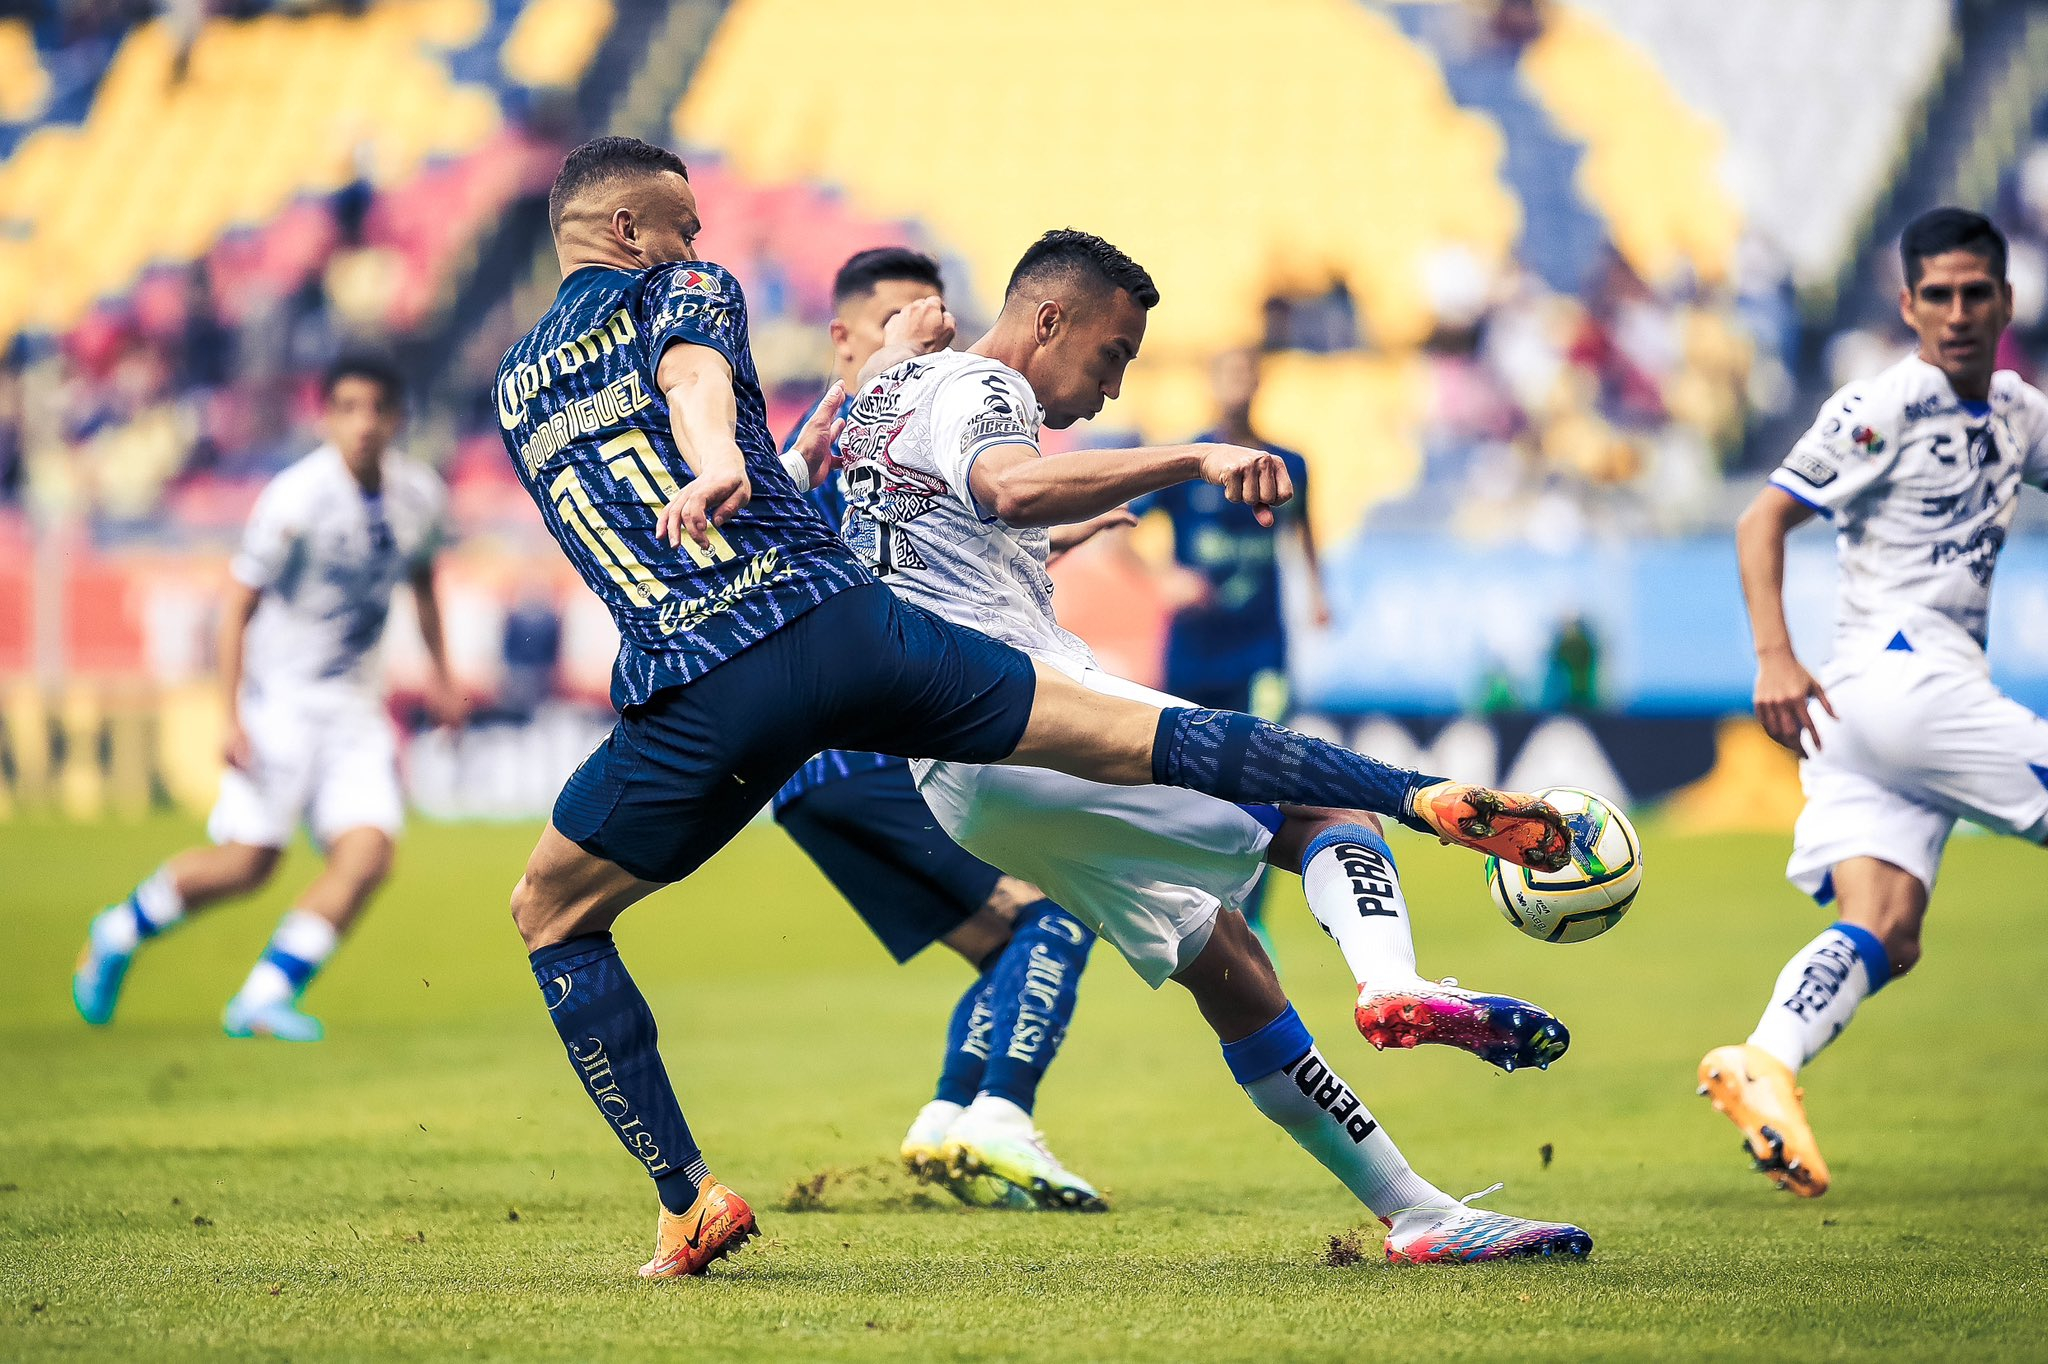 With Pedro Aquino, América drew 0-0 against Querétaro in the first match of the Liga MX.